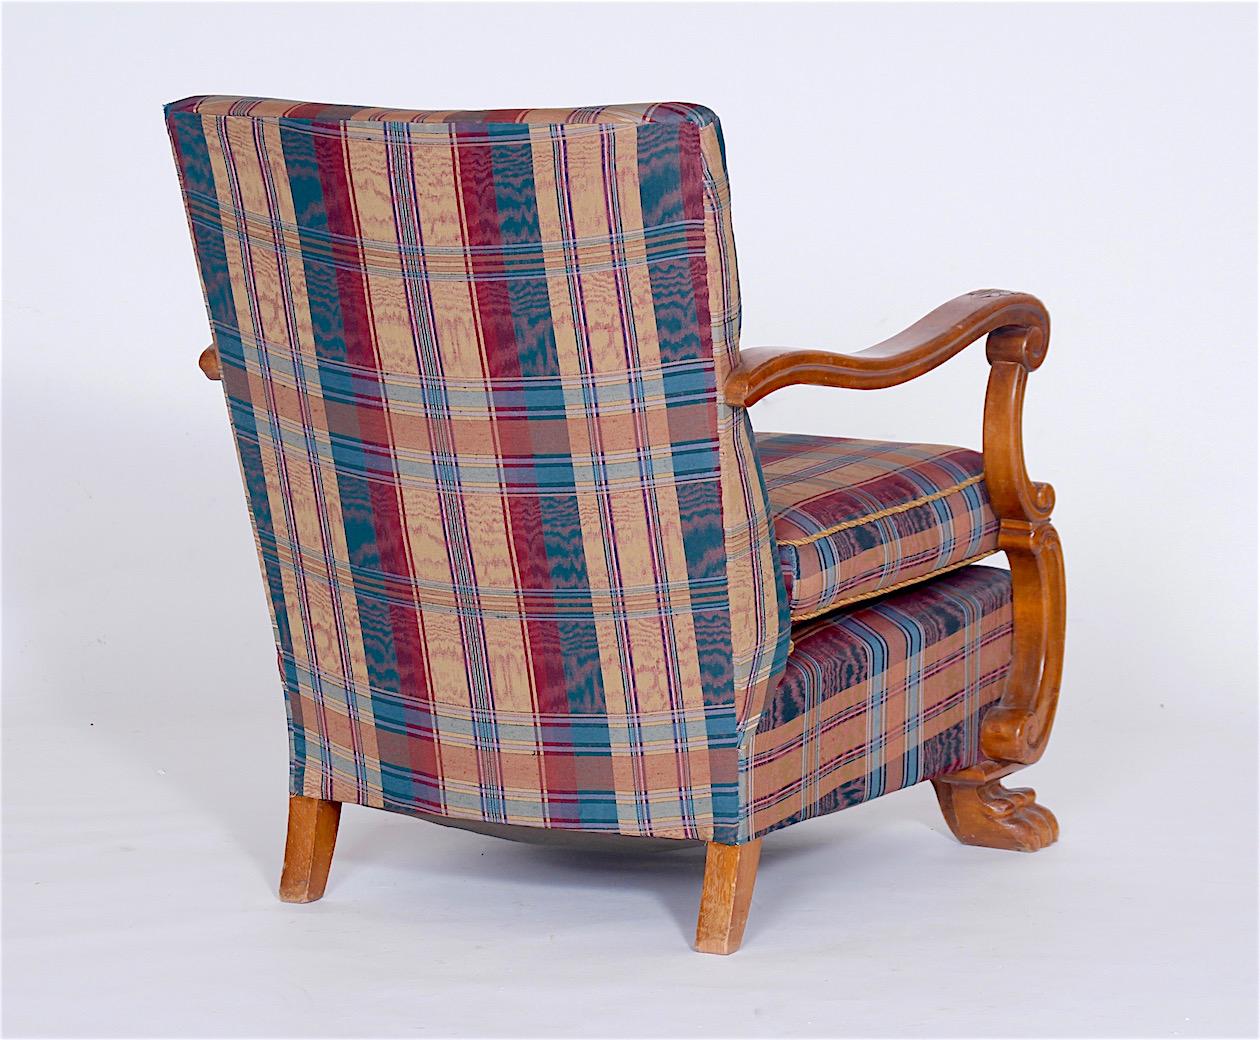 1920s armchairs